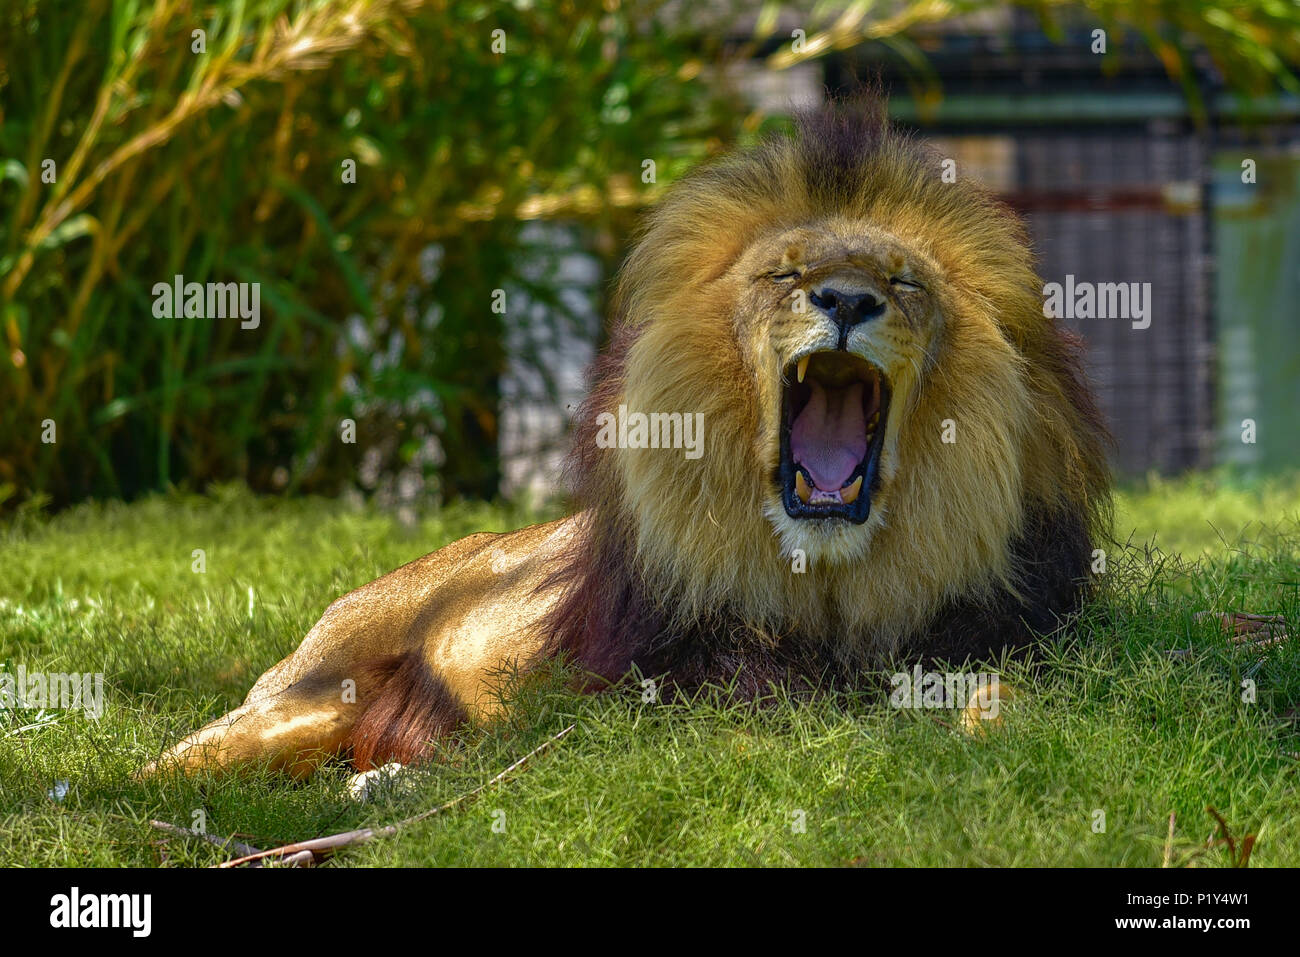 Lion the wildlife on grass Stock Photo